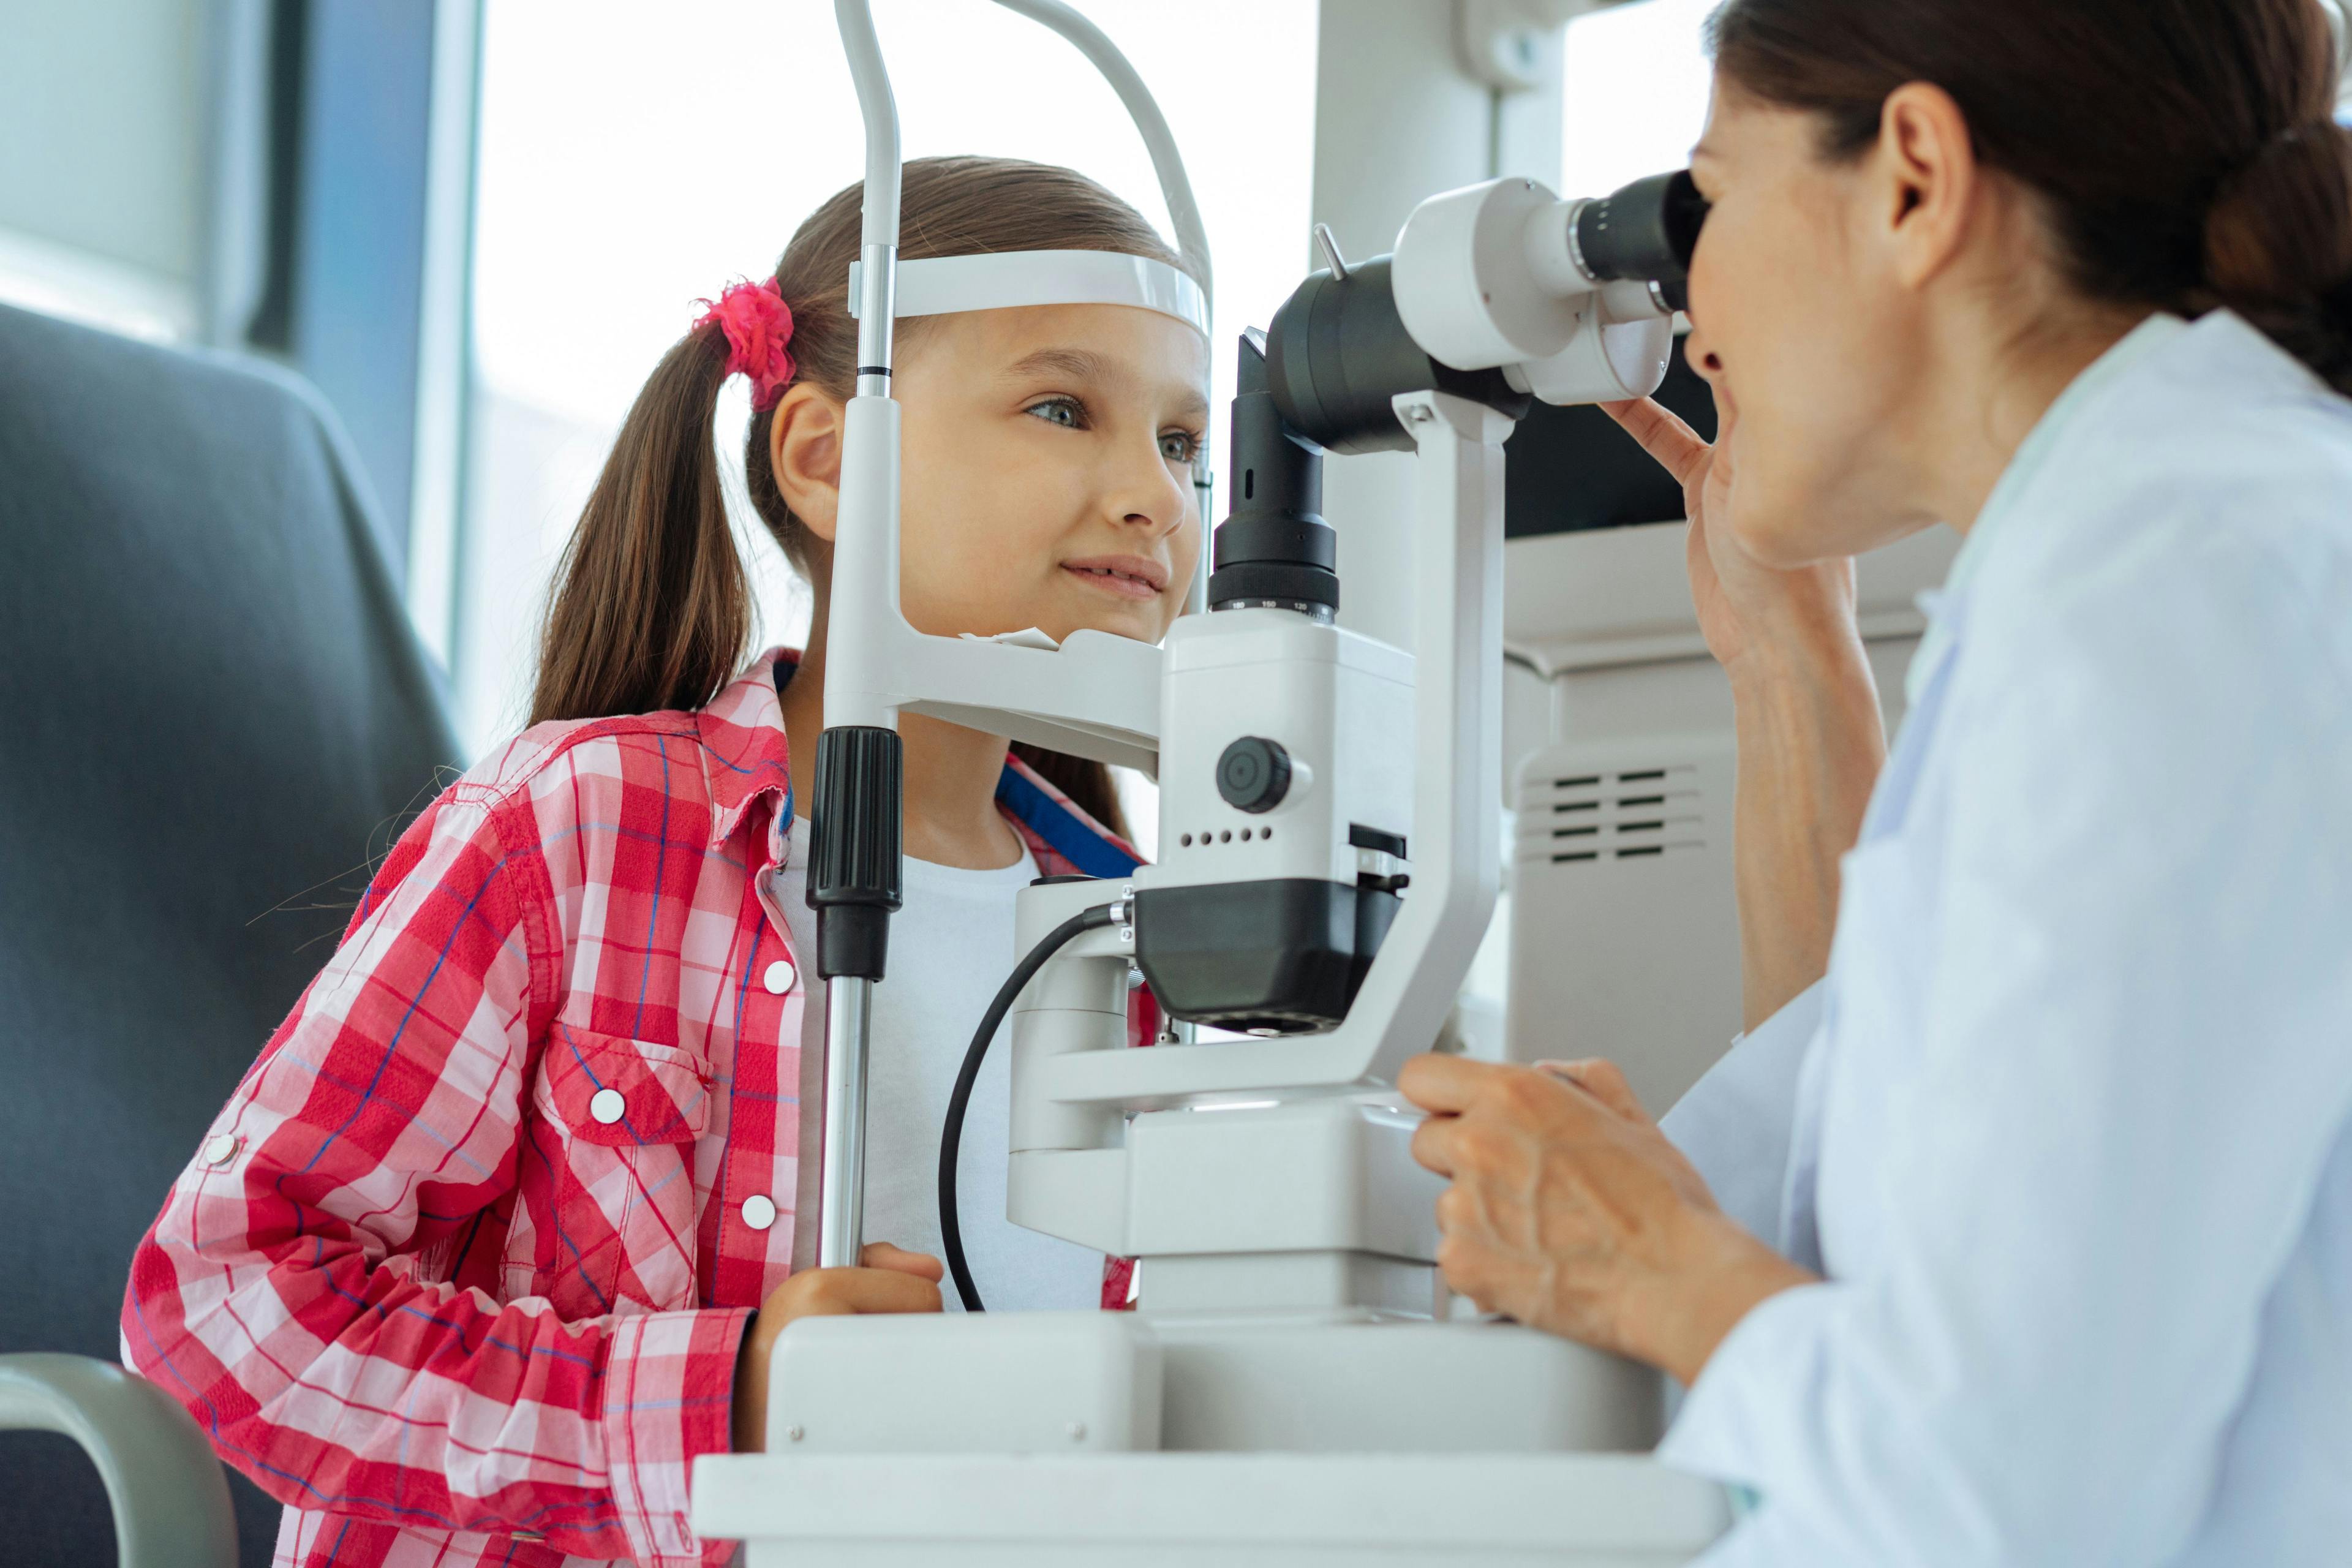 Child vision screening